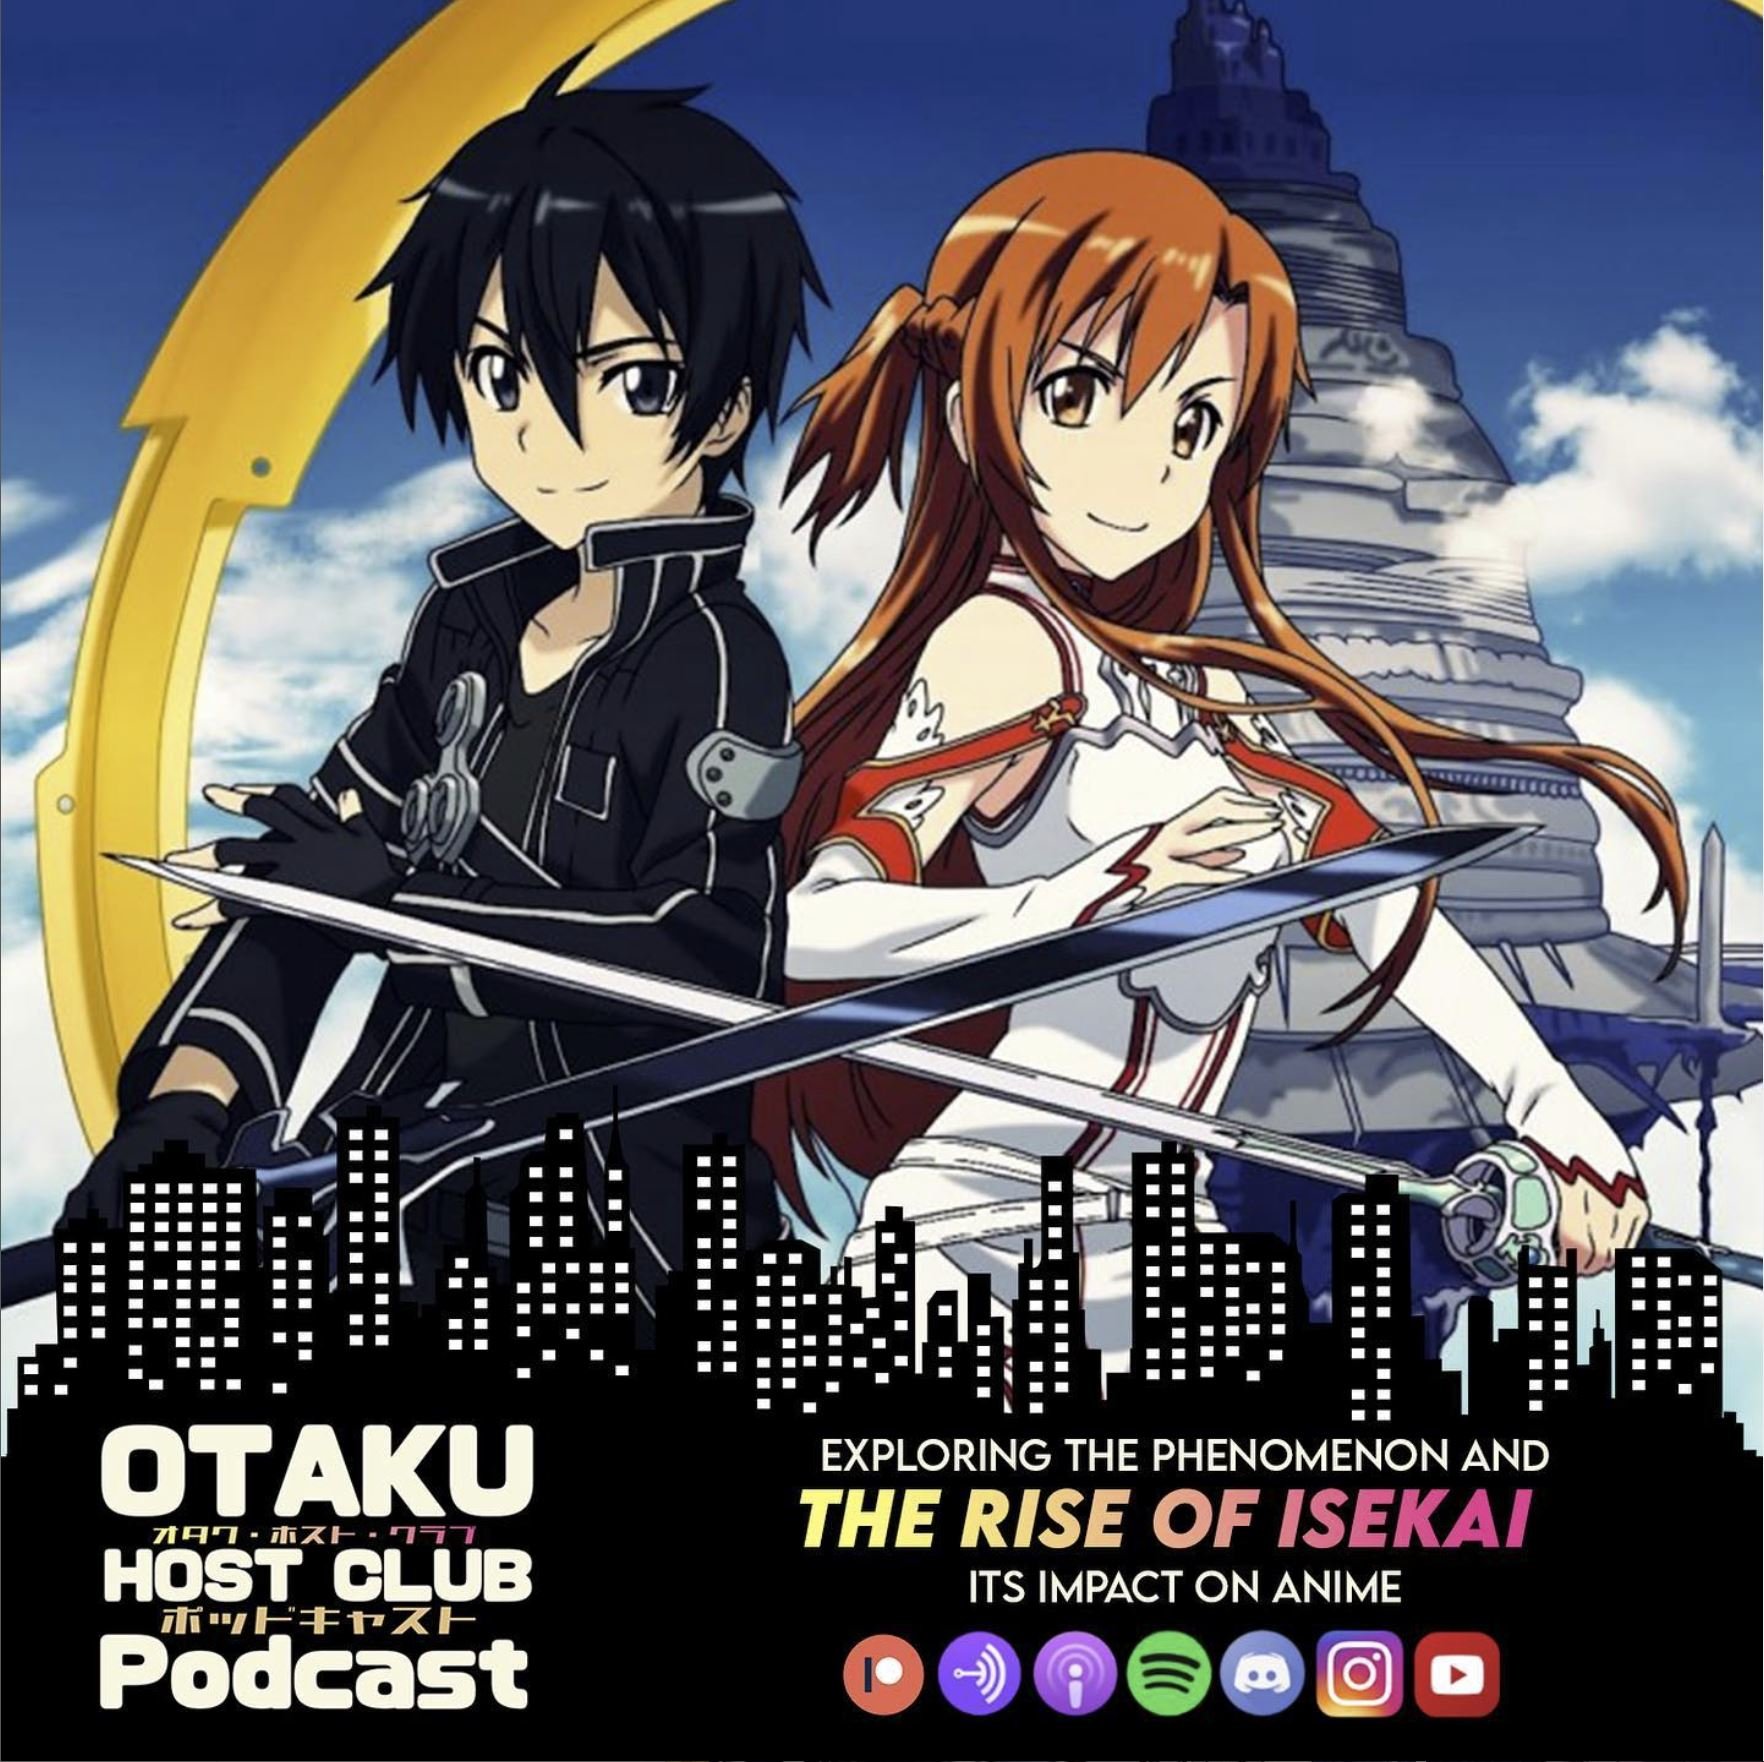 Online manga and anime club